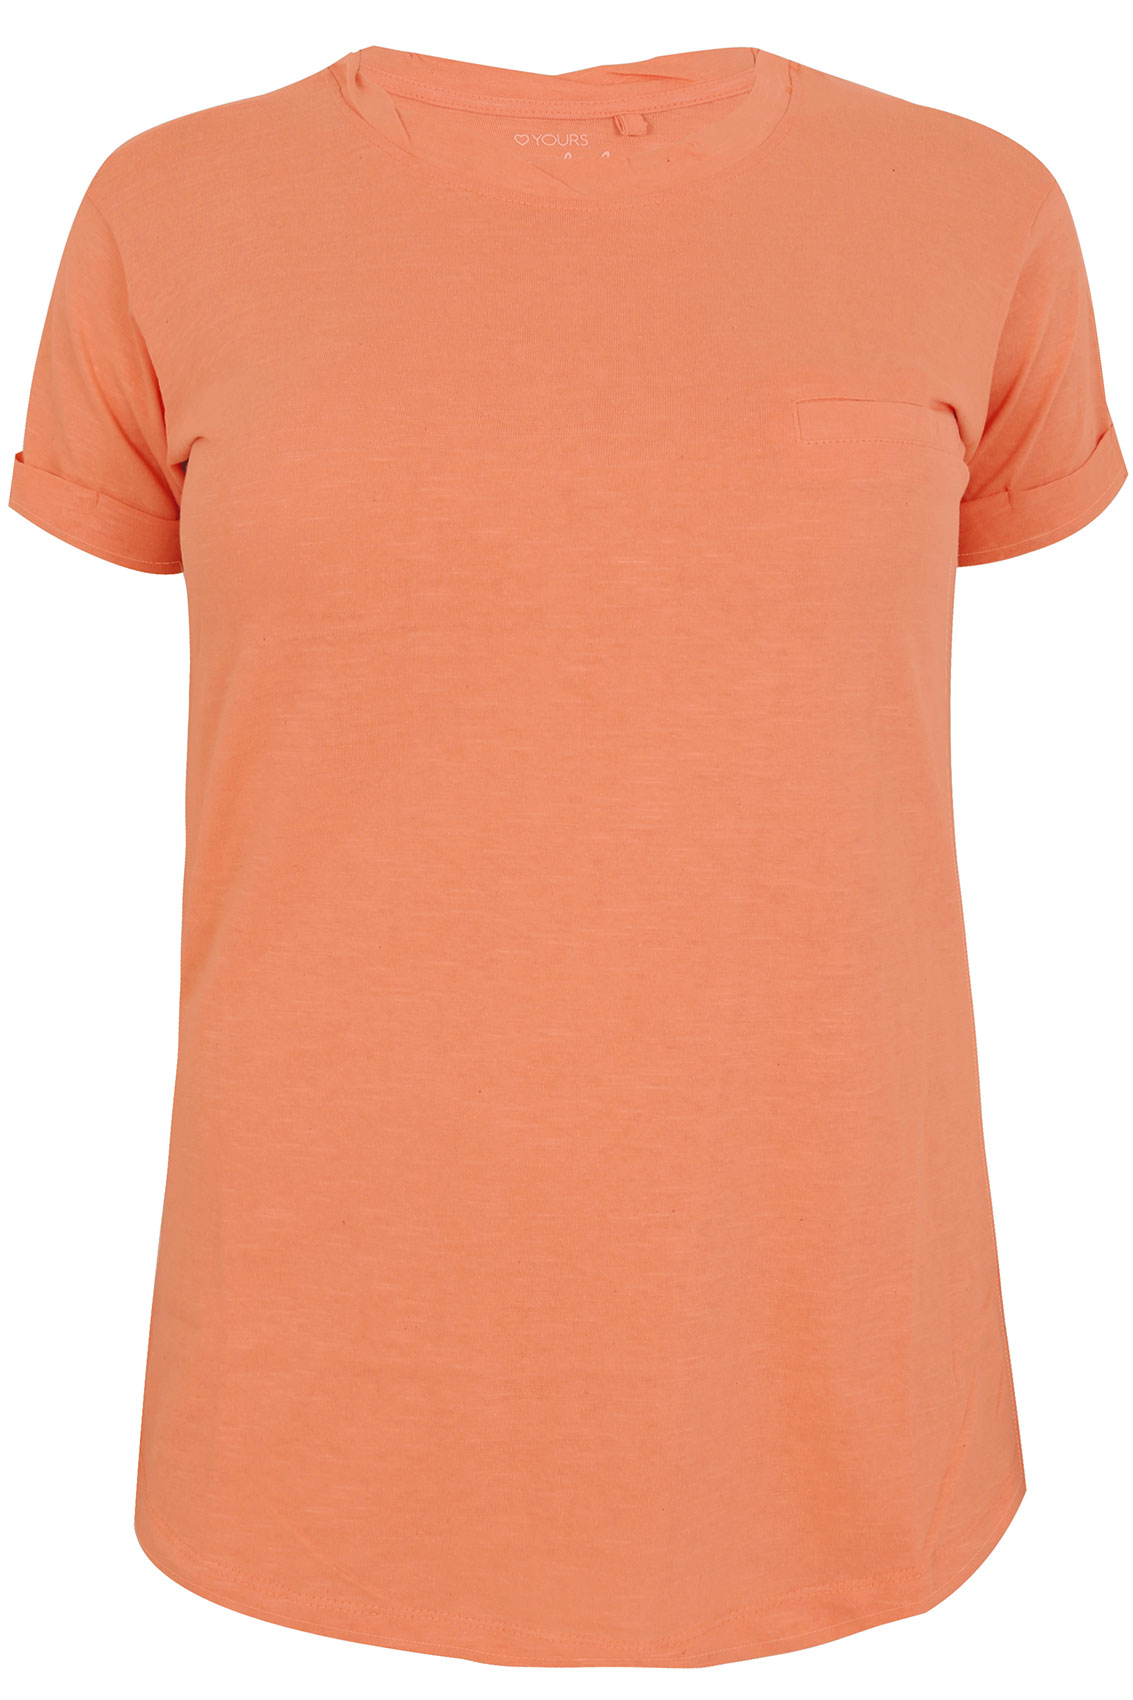 Peach Short Sleeve Boyfriend T-Shirt With Pocket Detail Plus Size 16 to 32